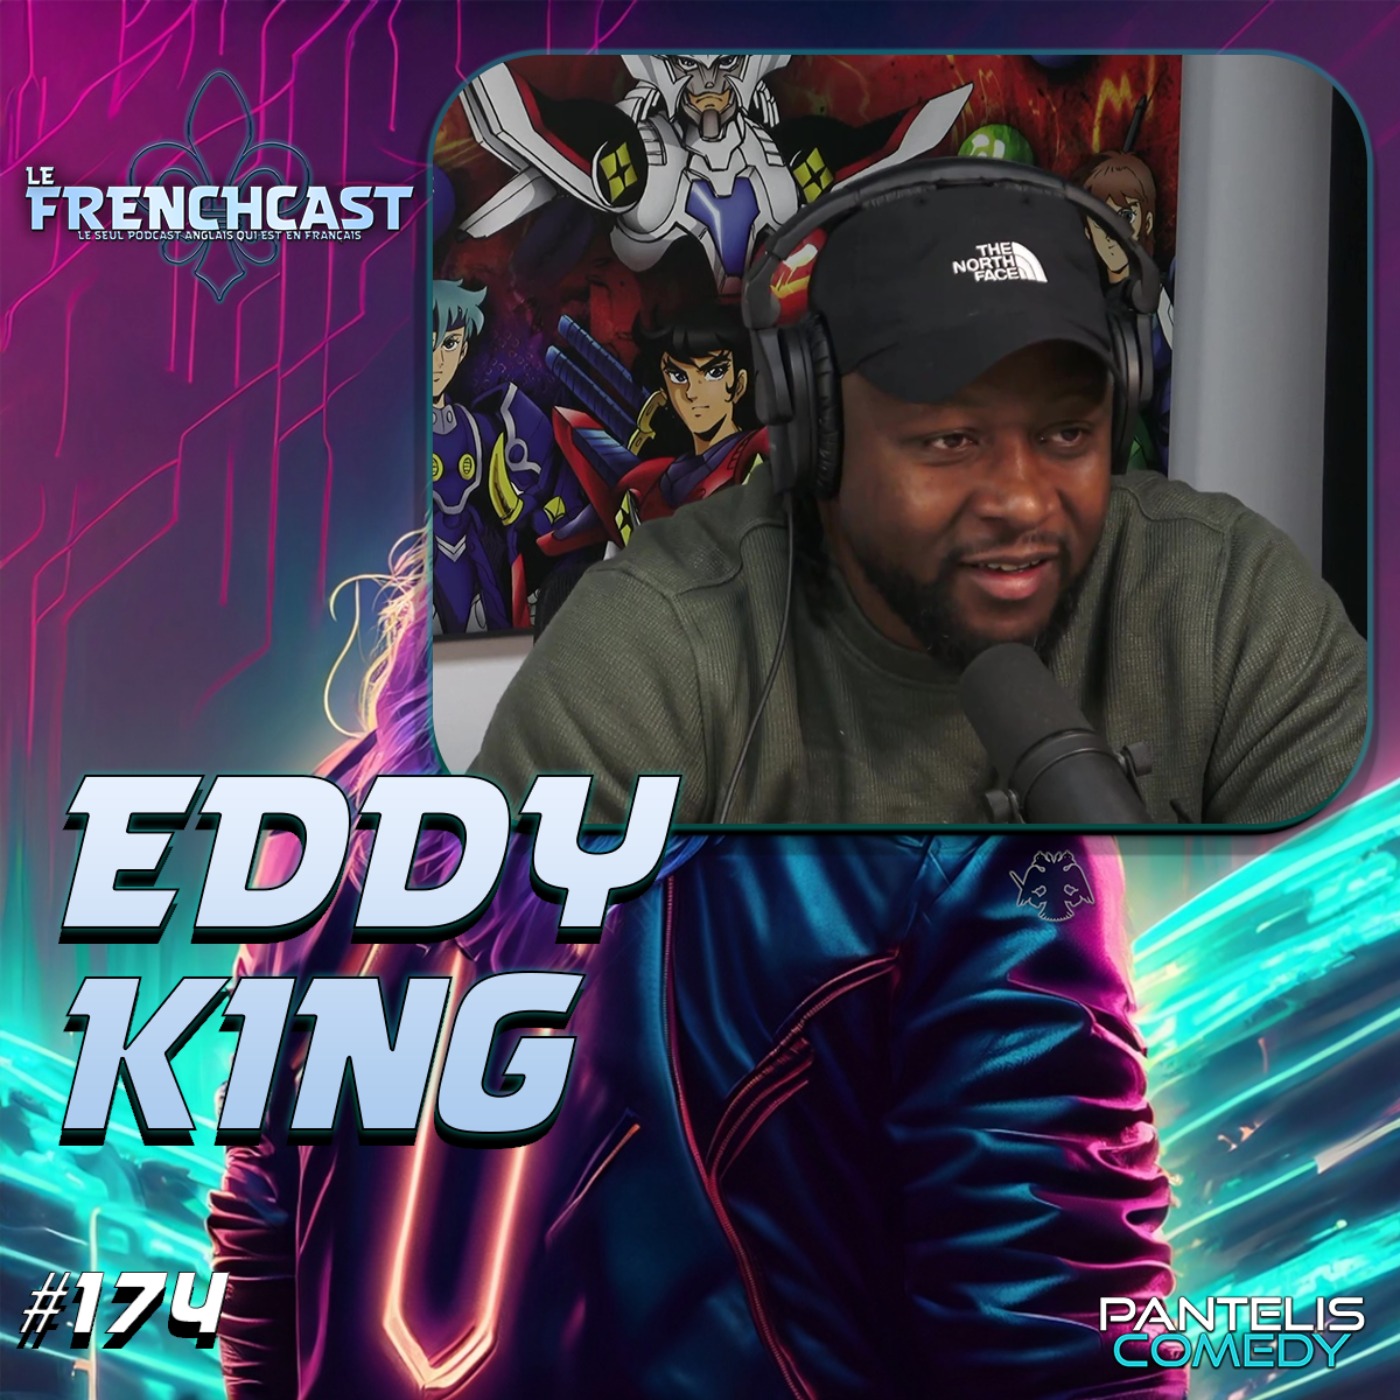 #174 - Eddy king